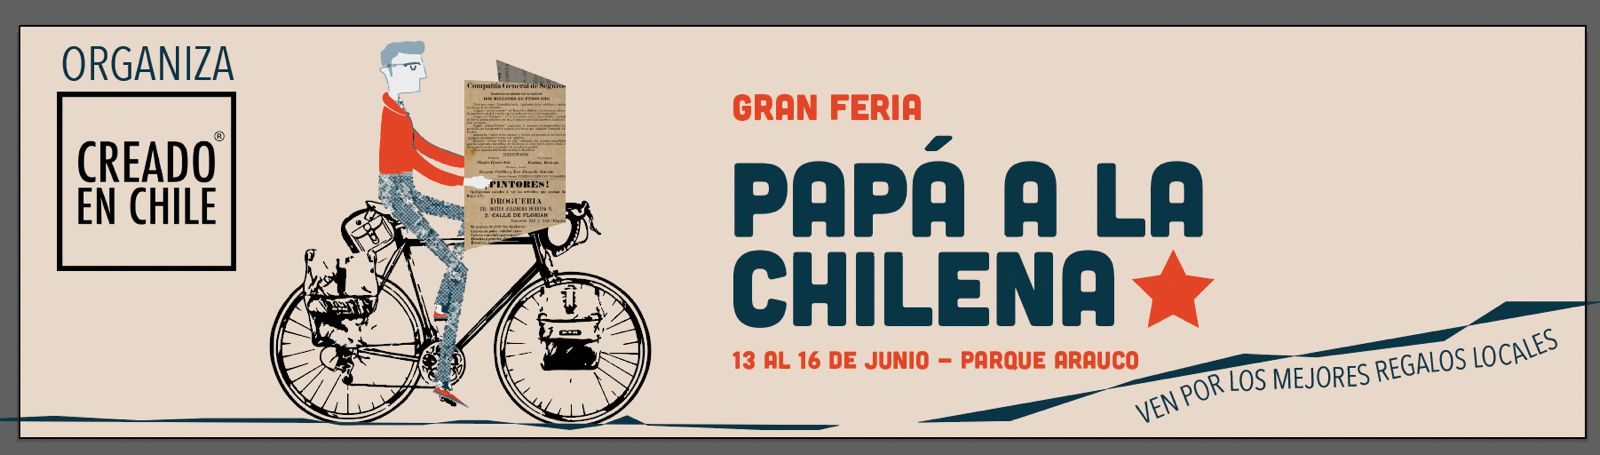 Feria Papá a la Chilena - Parque Arauco